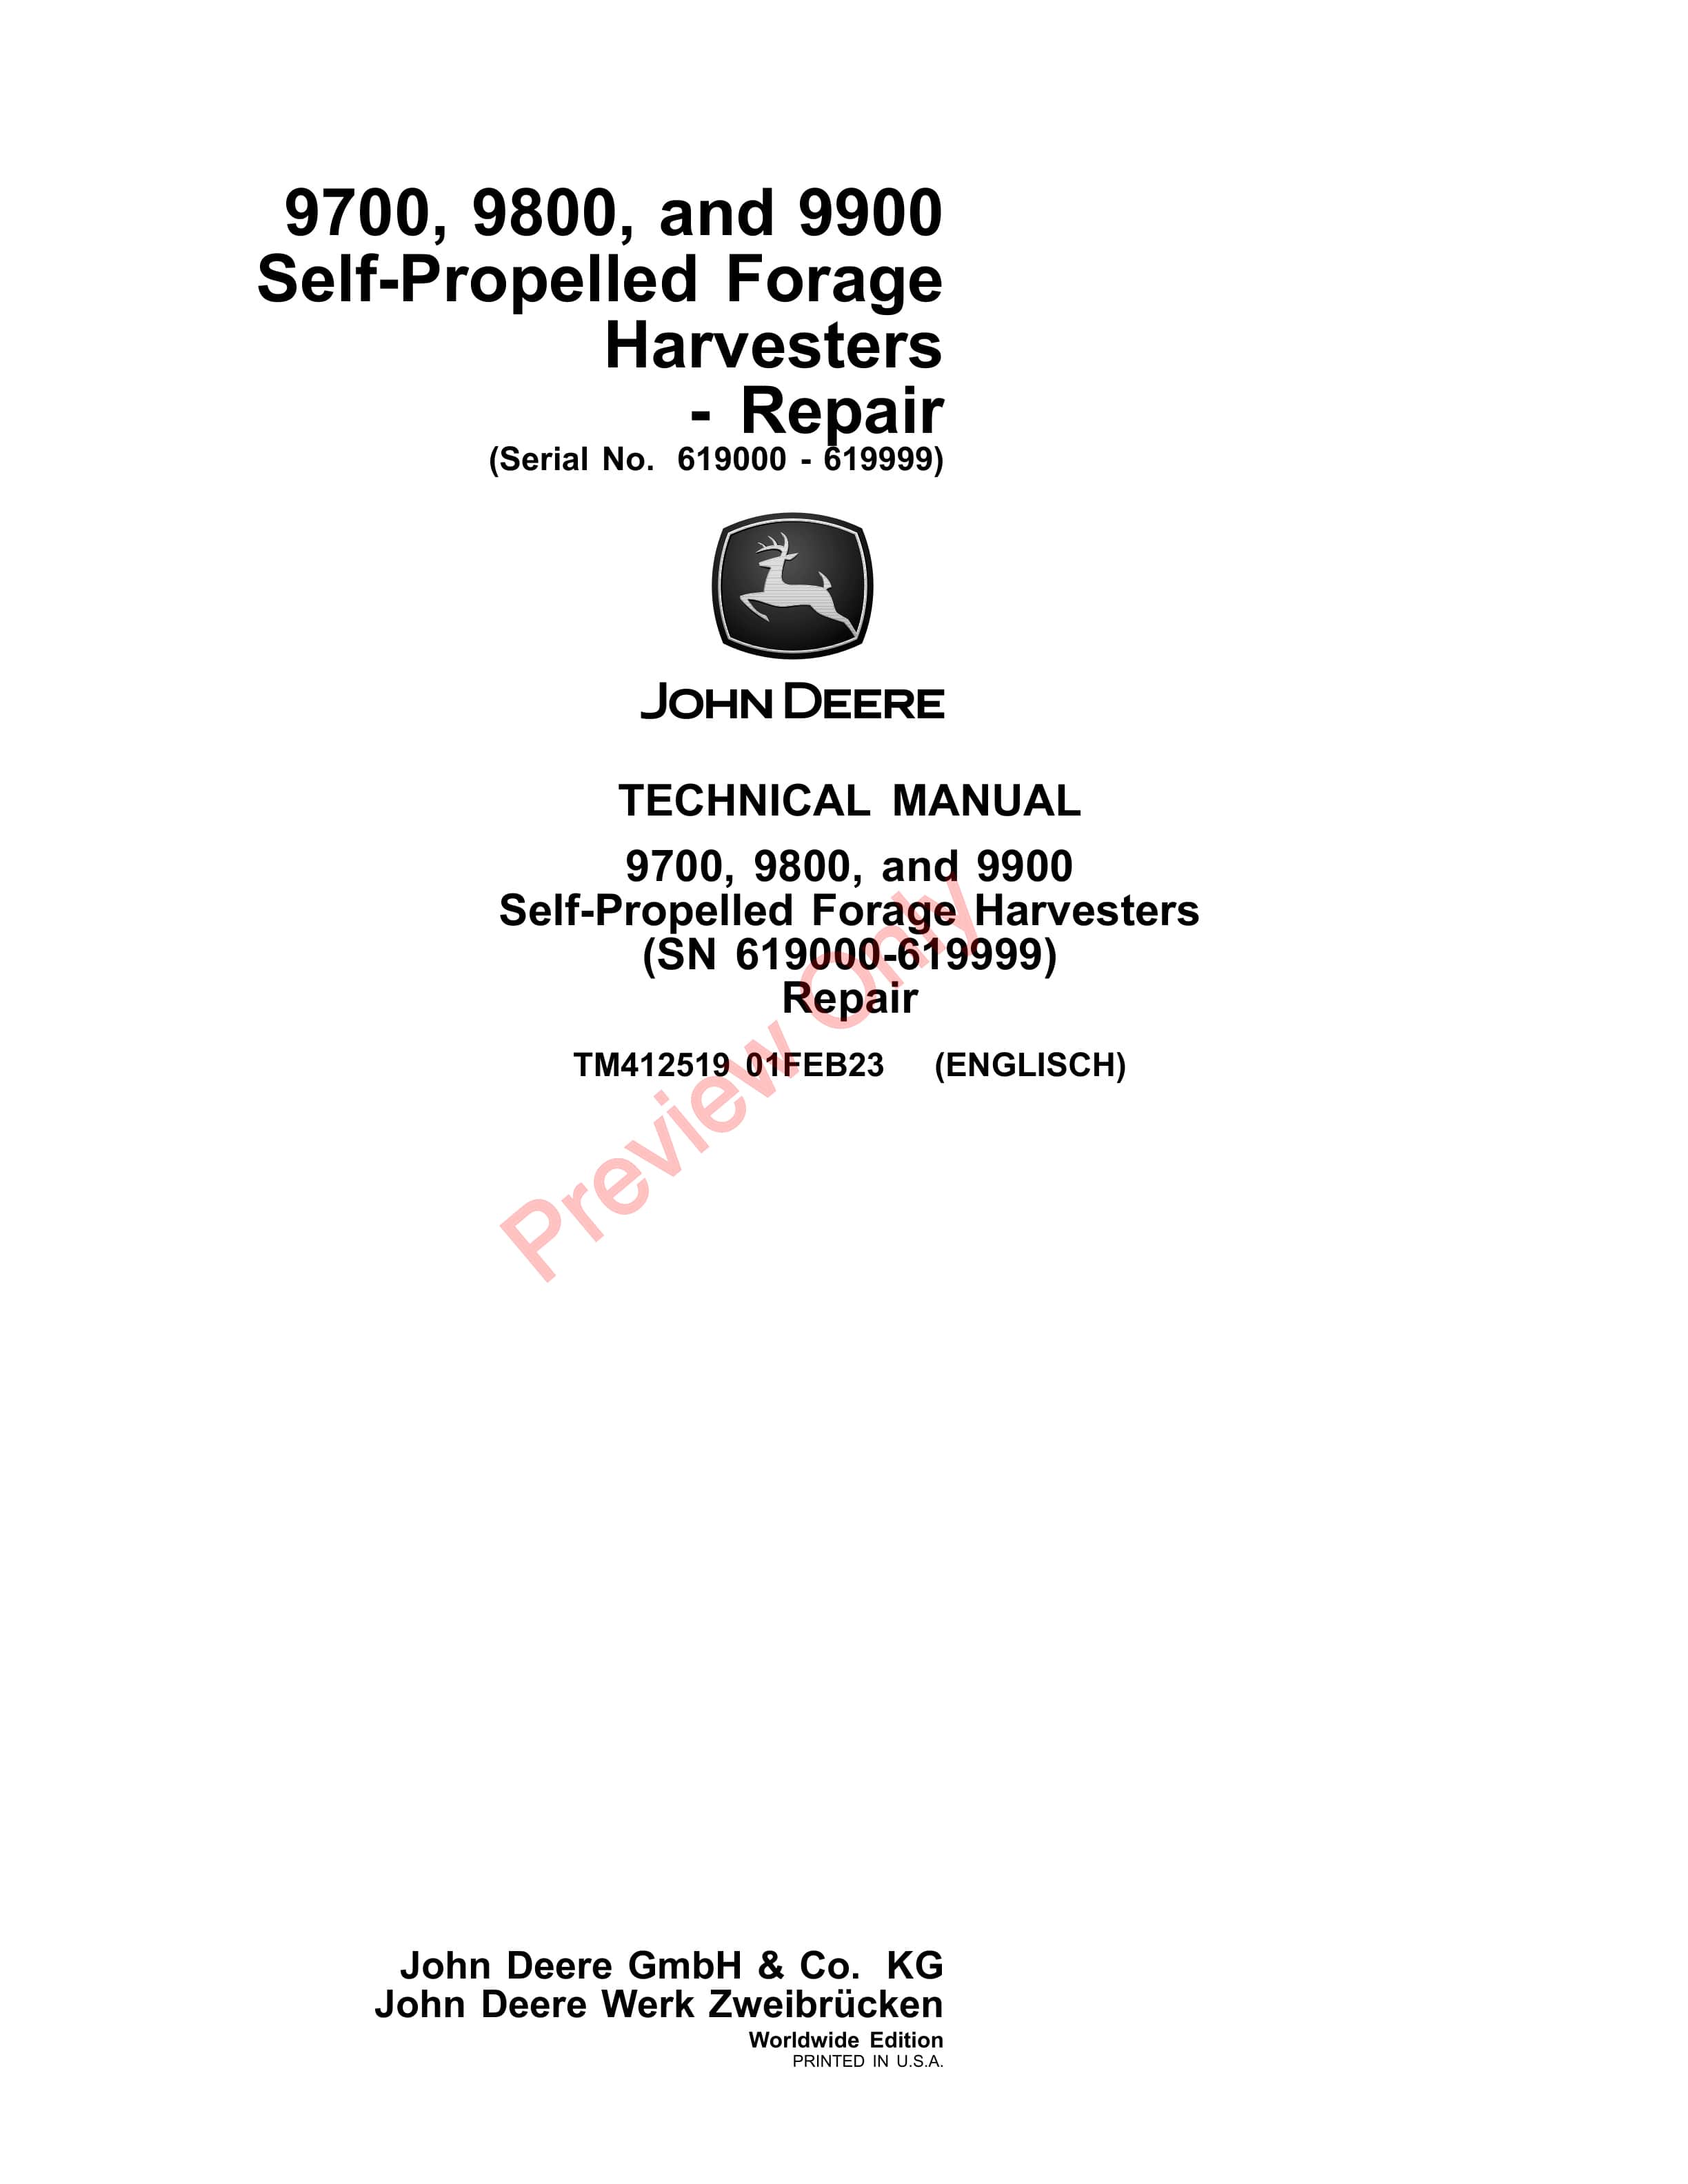 John Deere 9700 9800 and 9900 Self Propelled Forage Harvesters Technical Manual TM412519 01FEB23 1